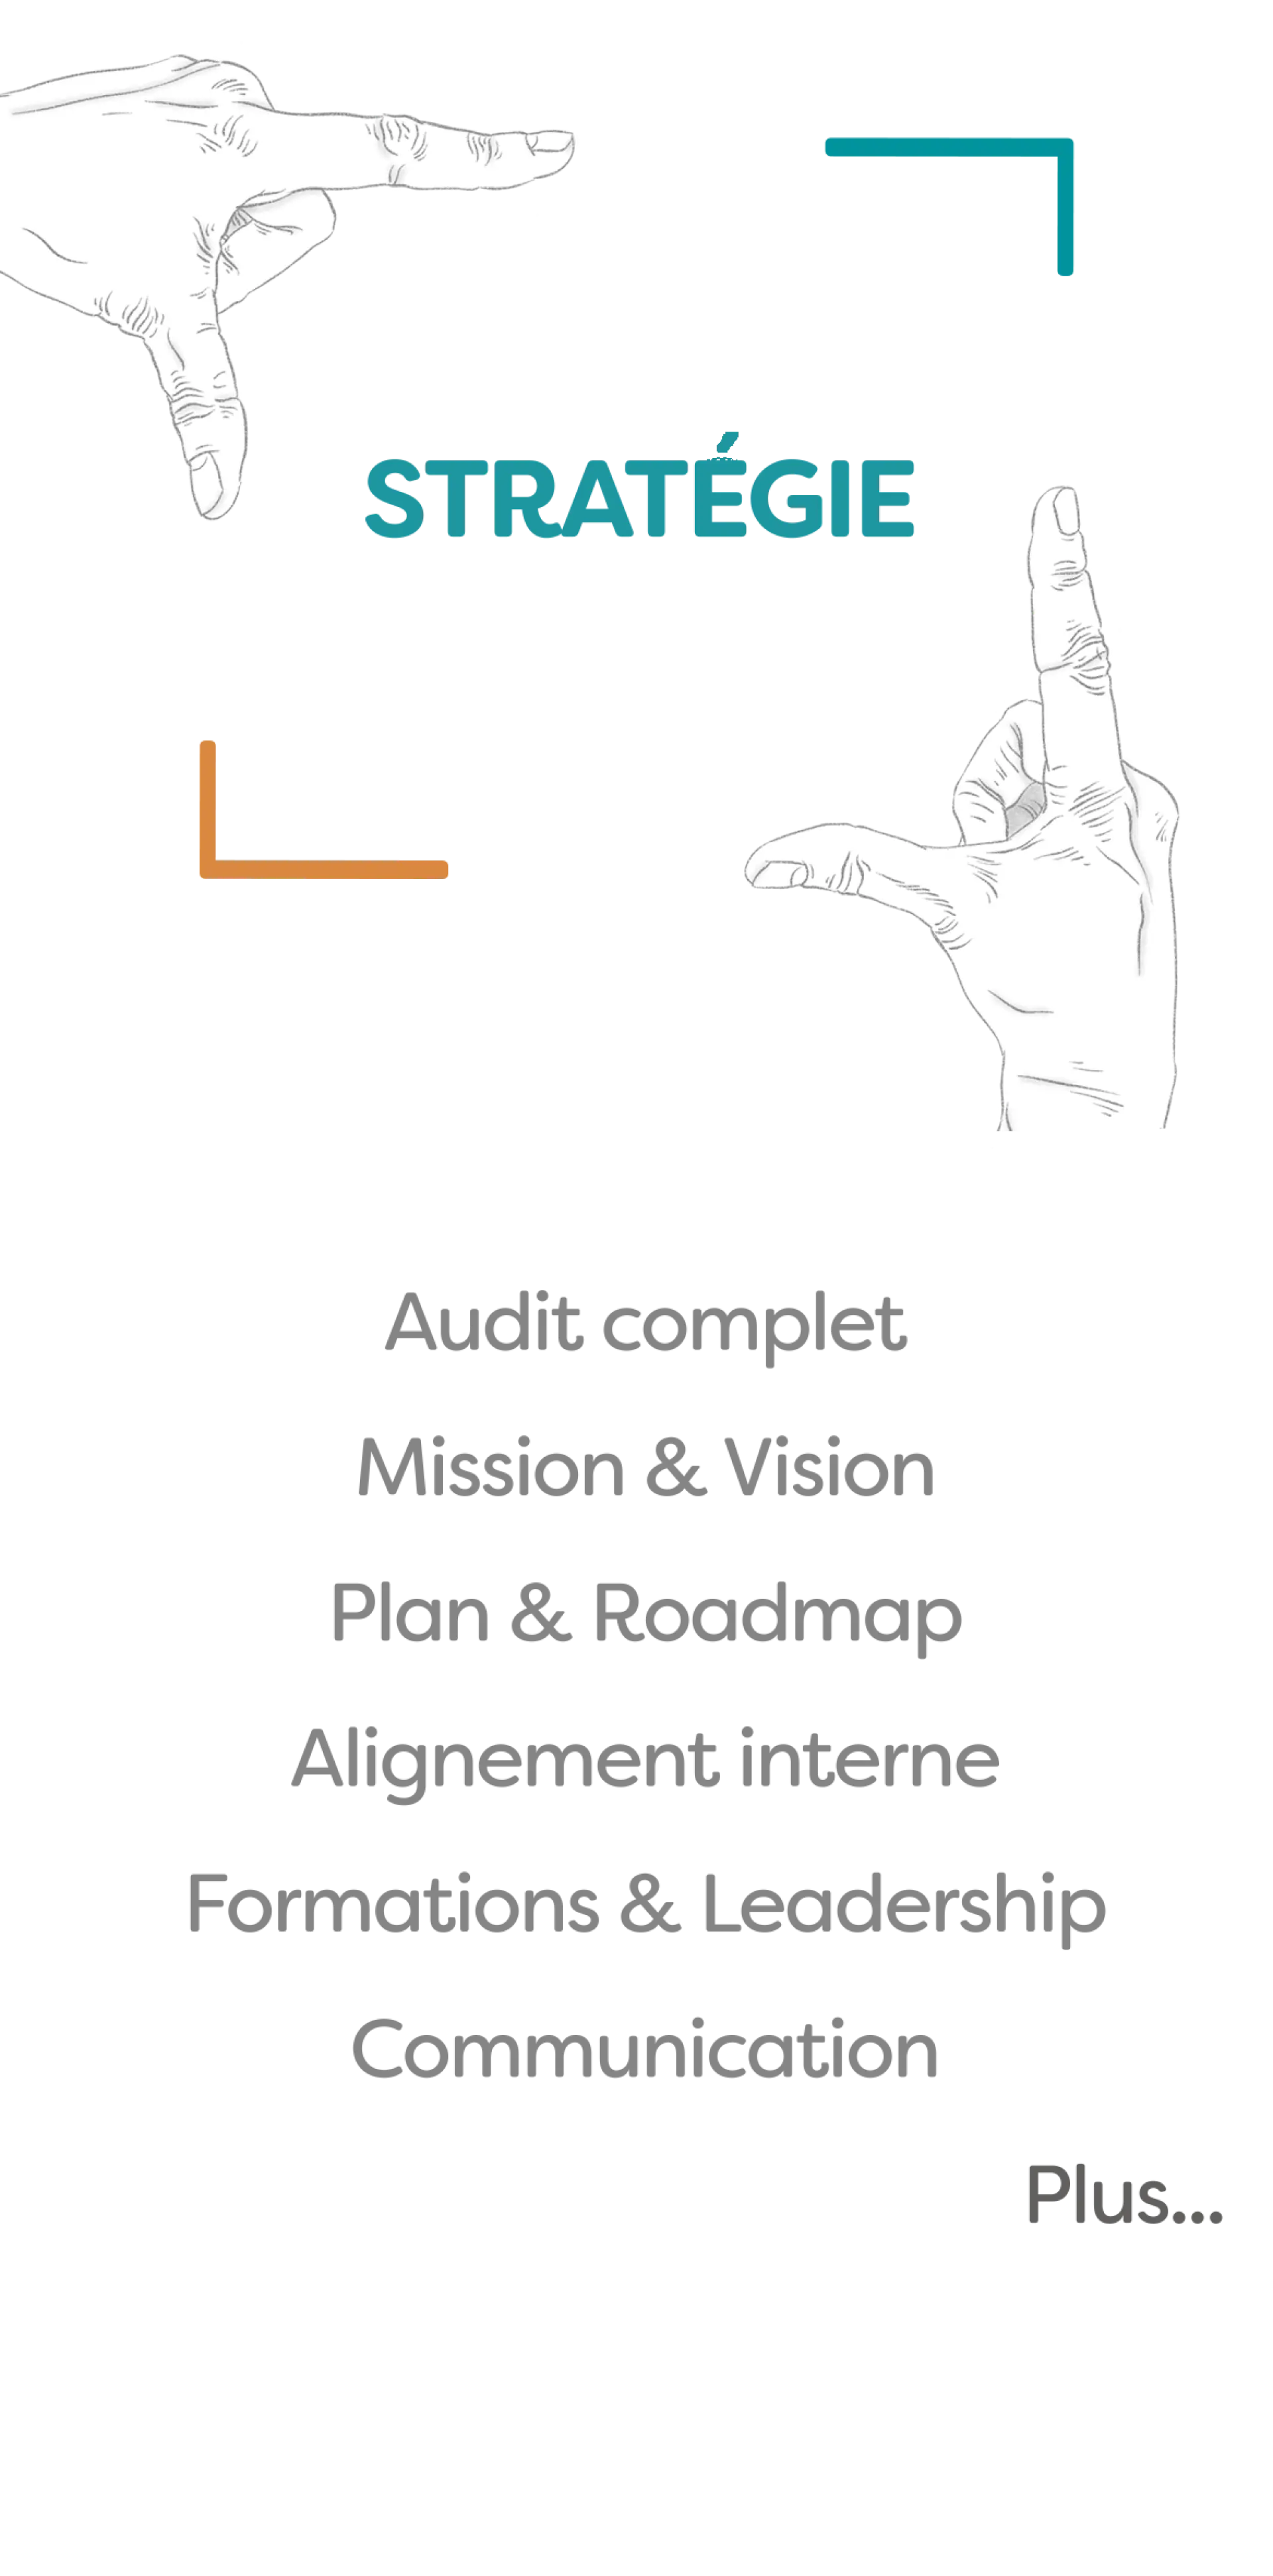 Services Stratégie : Full Audit, Mission, Vision, Formations, Leadership